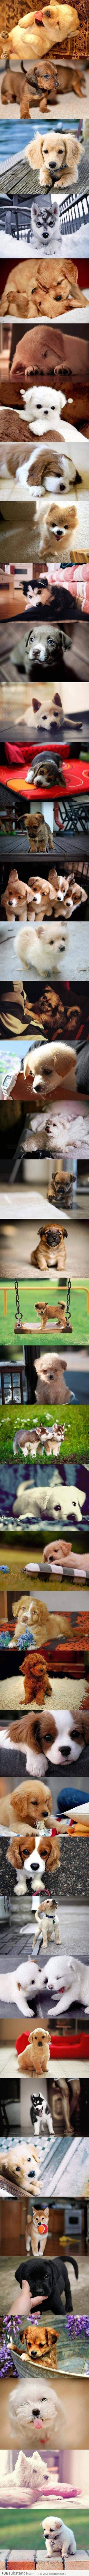 Super Cute Puppy Compilation